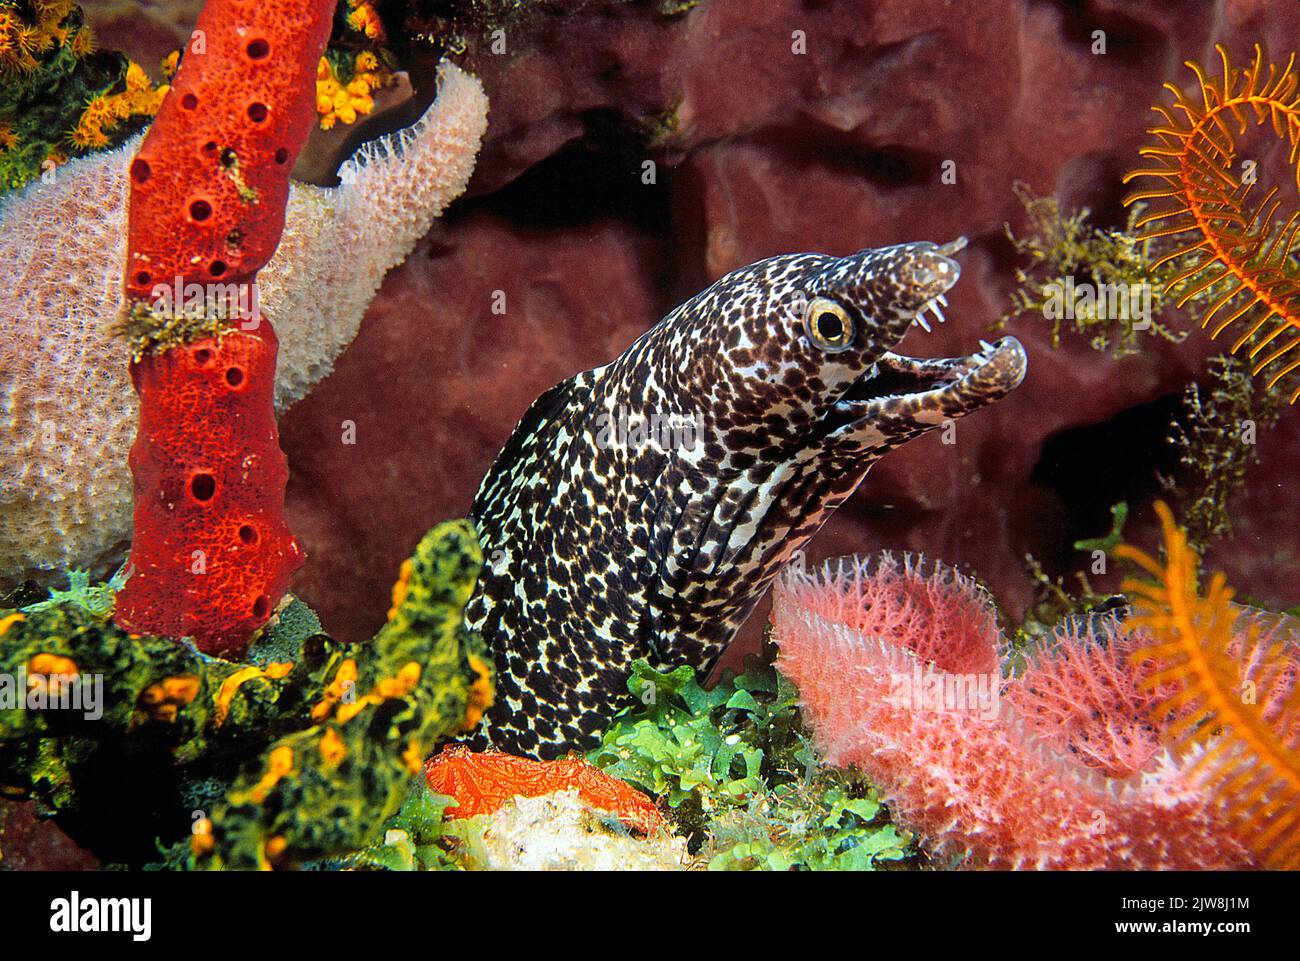 Moray manchado (Gymnothorax moringa) en un arrecife coralino caribeño, Statia, San Eustaquio, Caribe Foto de stock